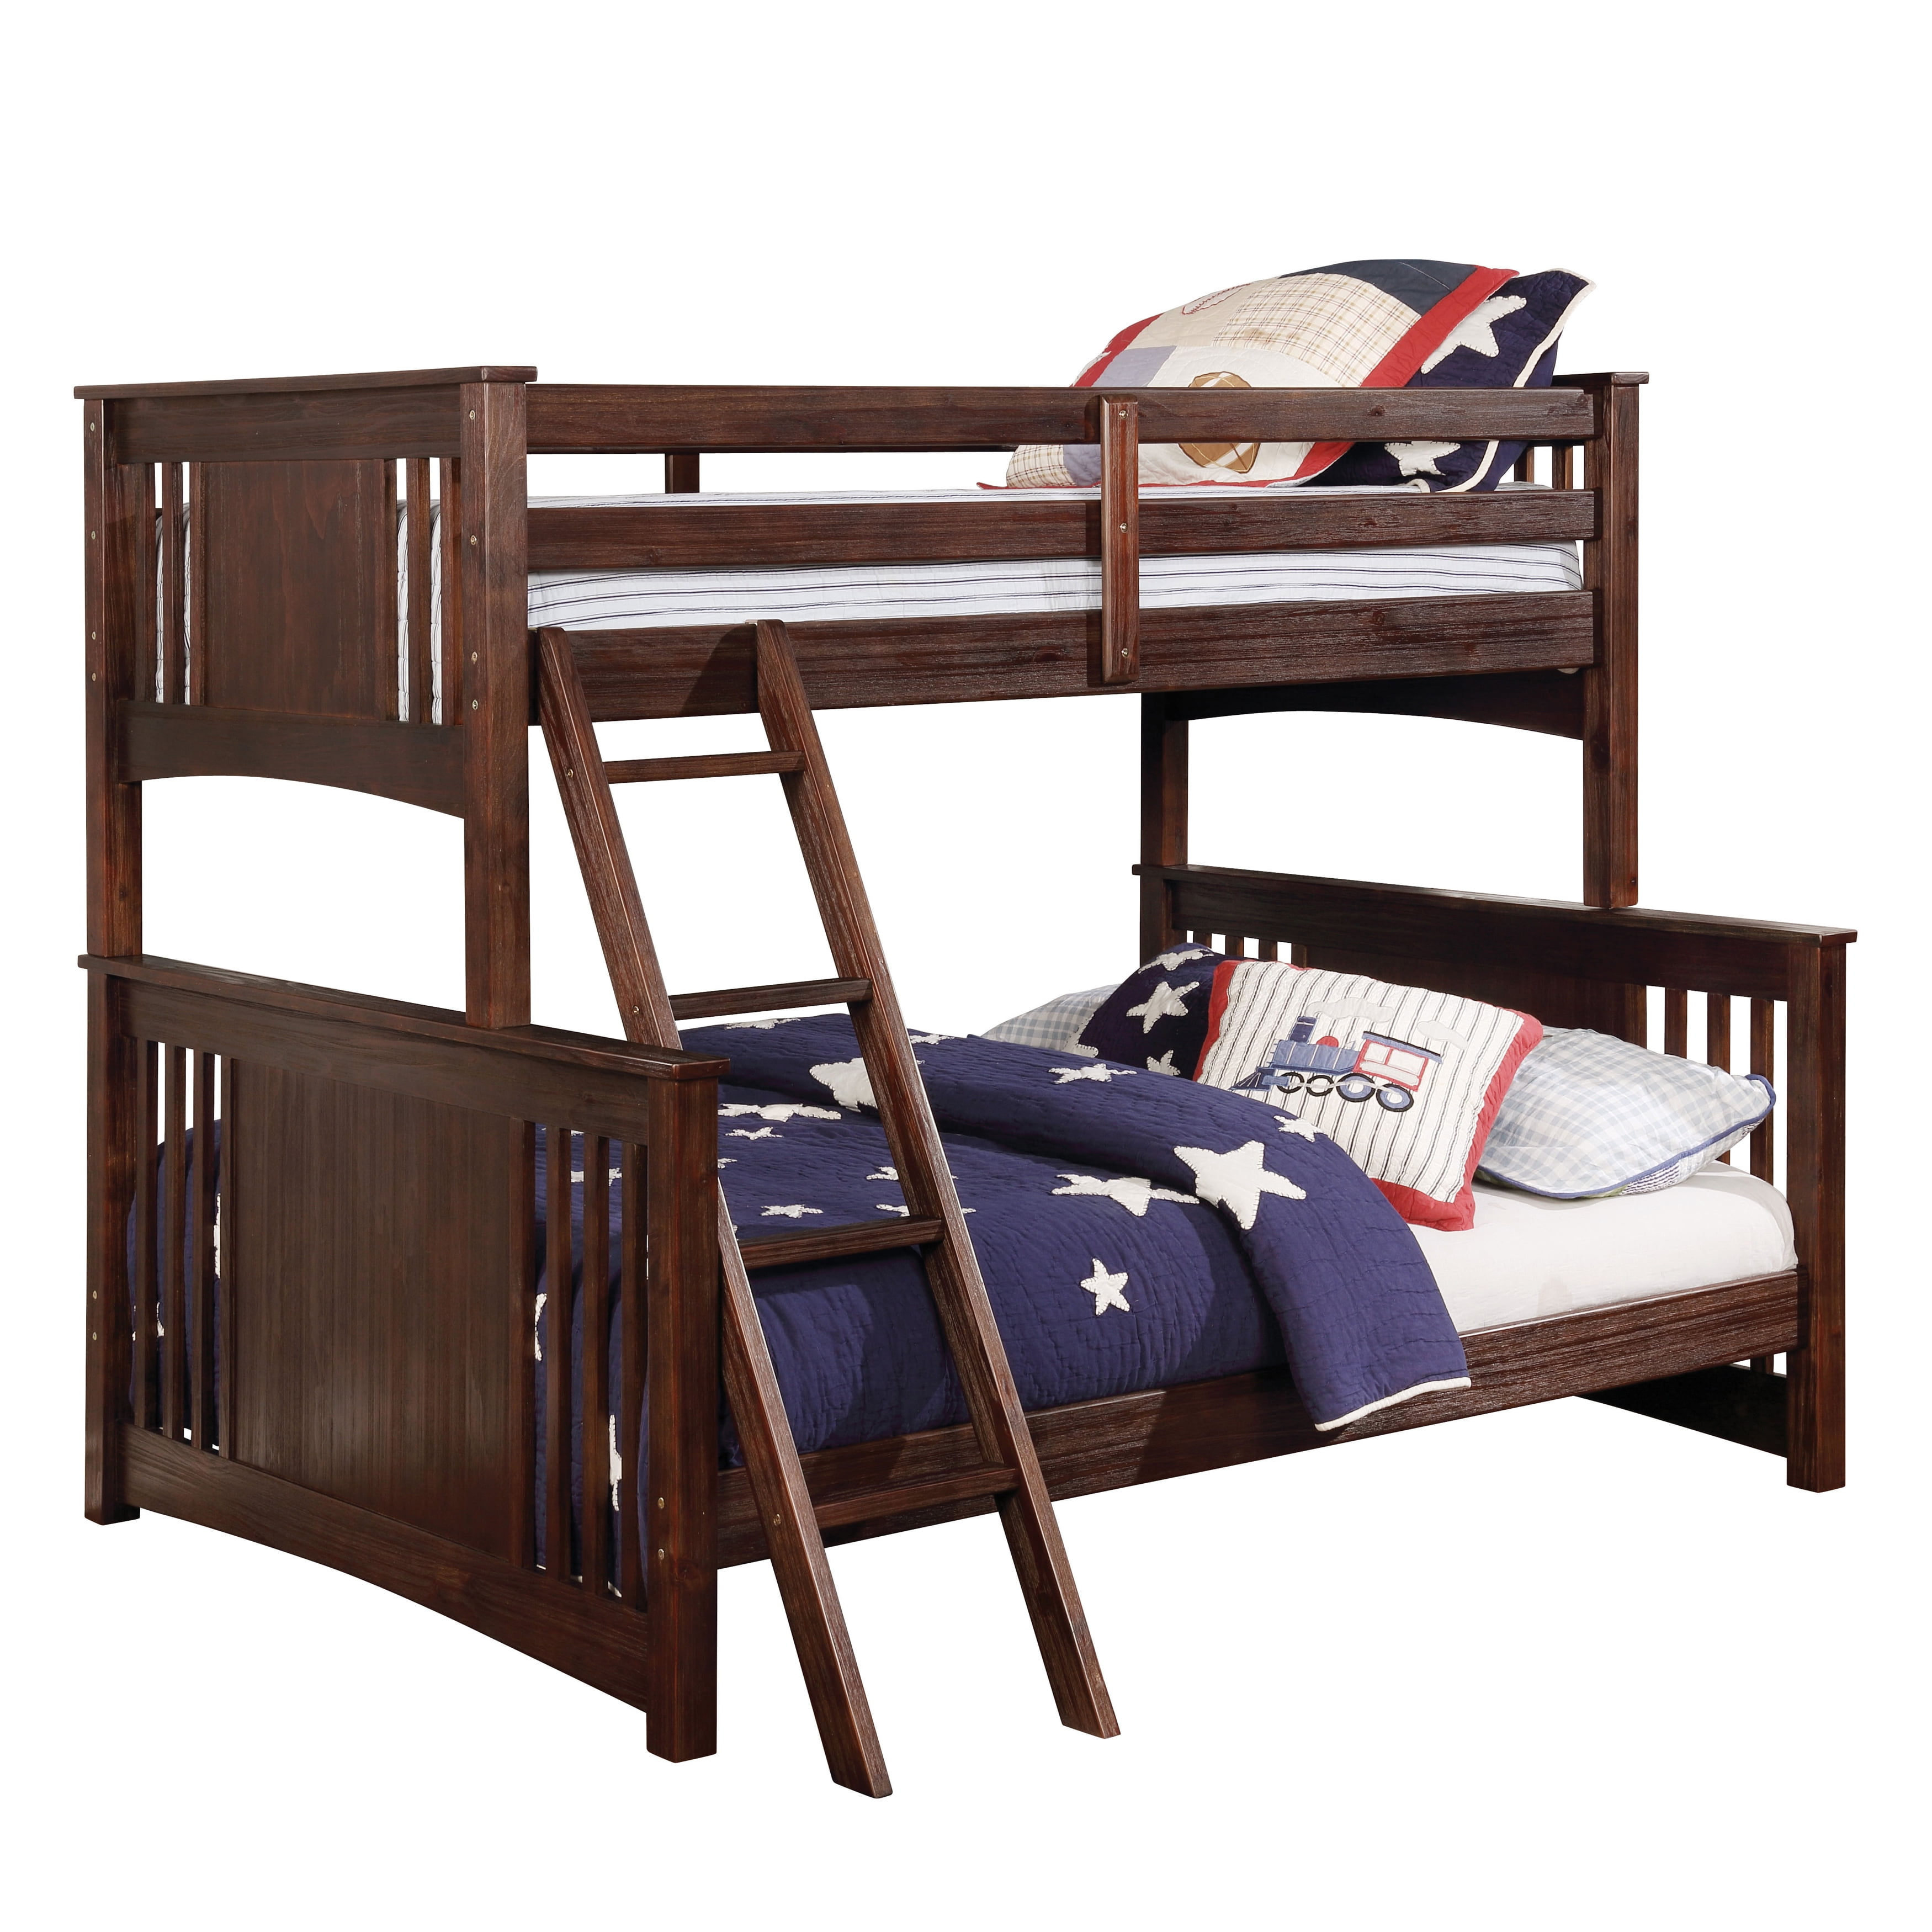 Furniture of America Welchen Twin over Full Bunk Bed in Dark Walnut 